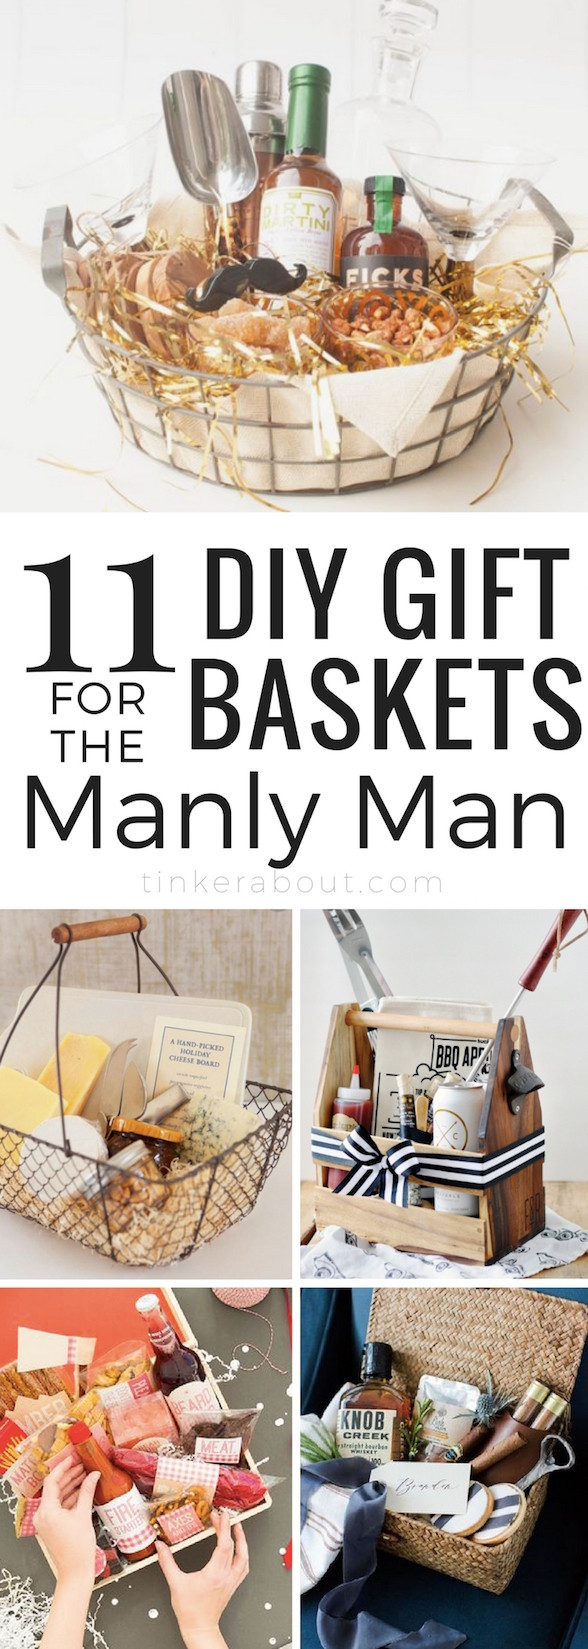 Gift Baskets For Men Ideas
 11 Best Gift Basket Ideas For Him